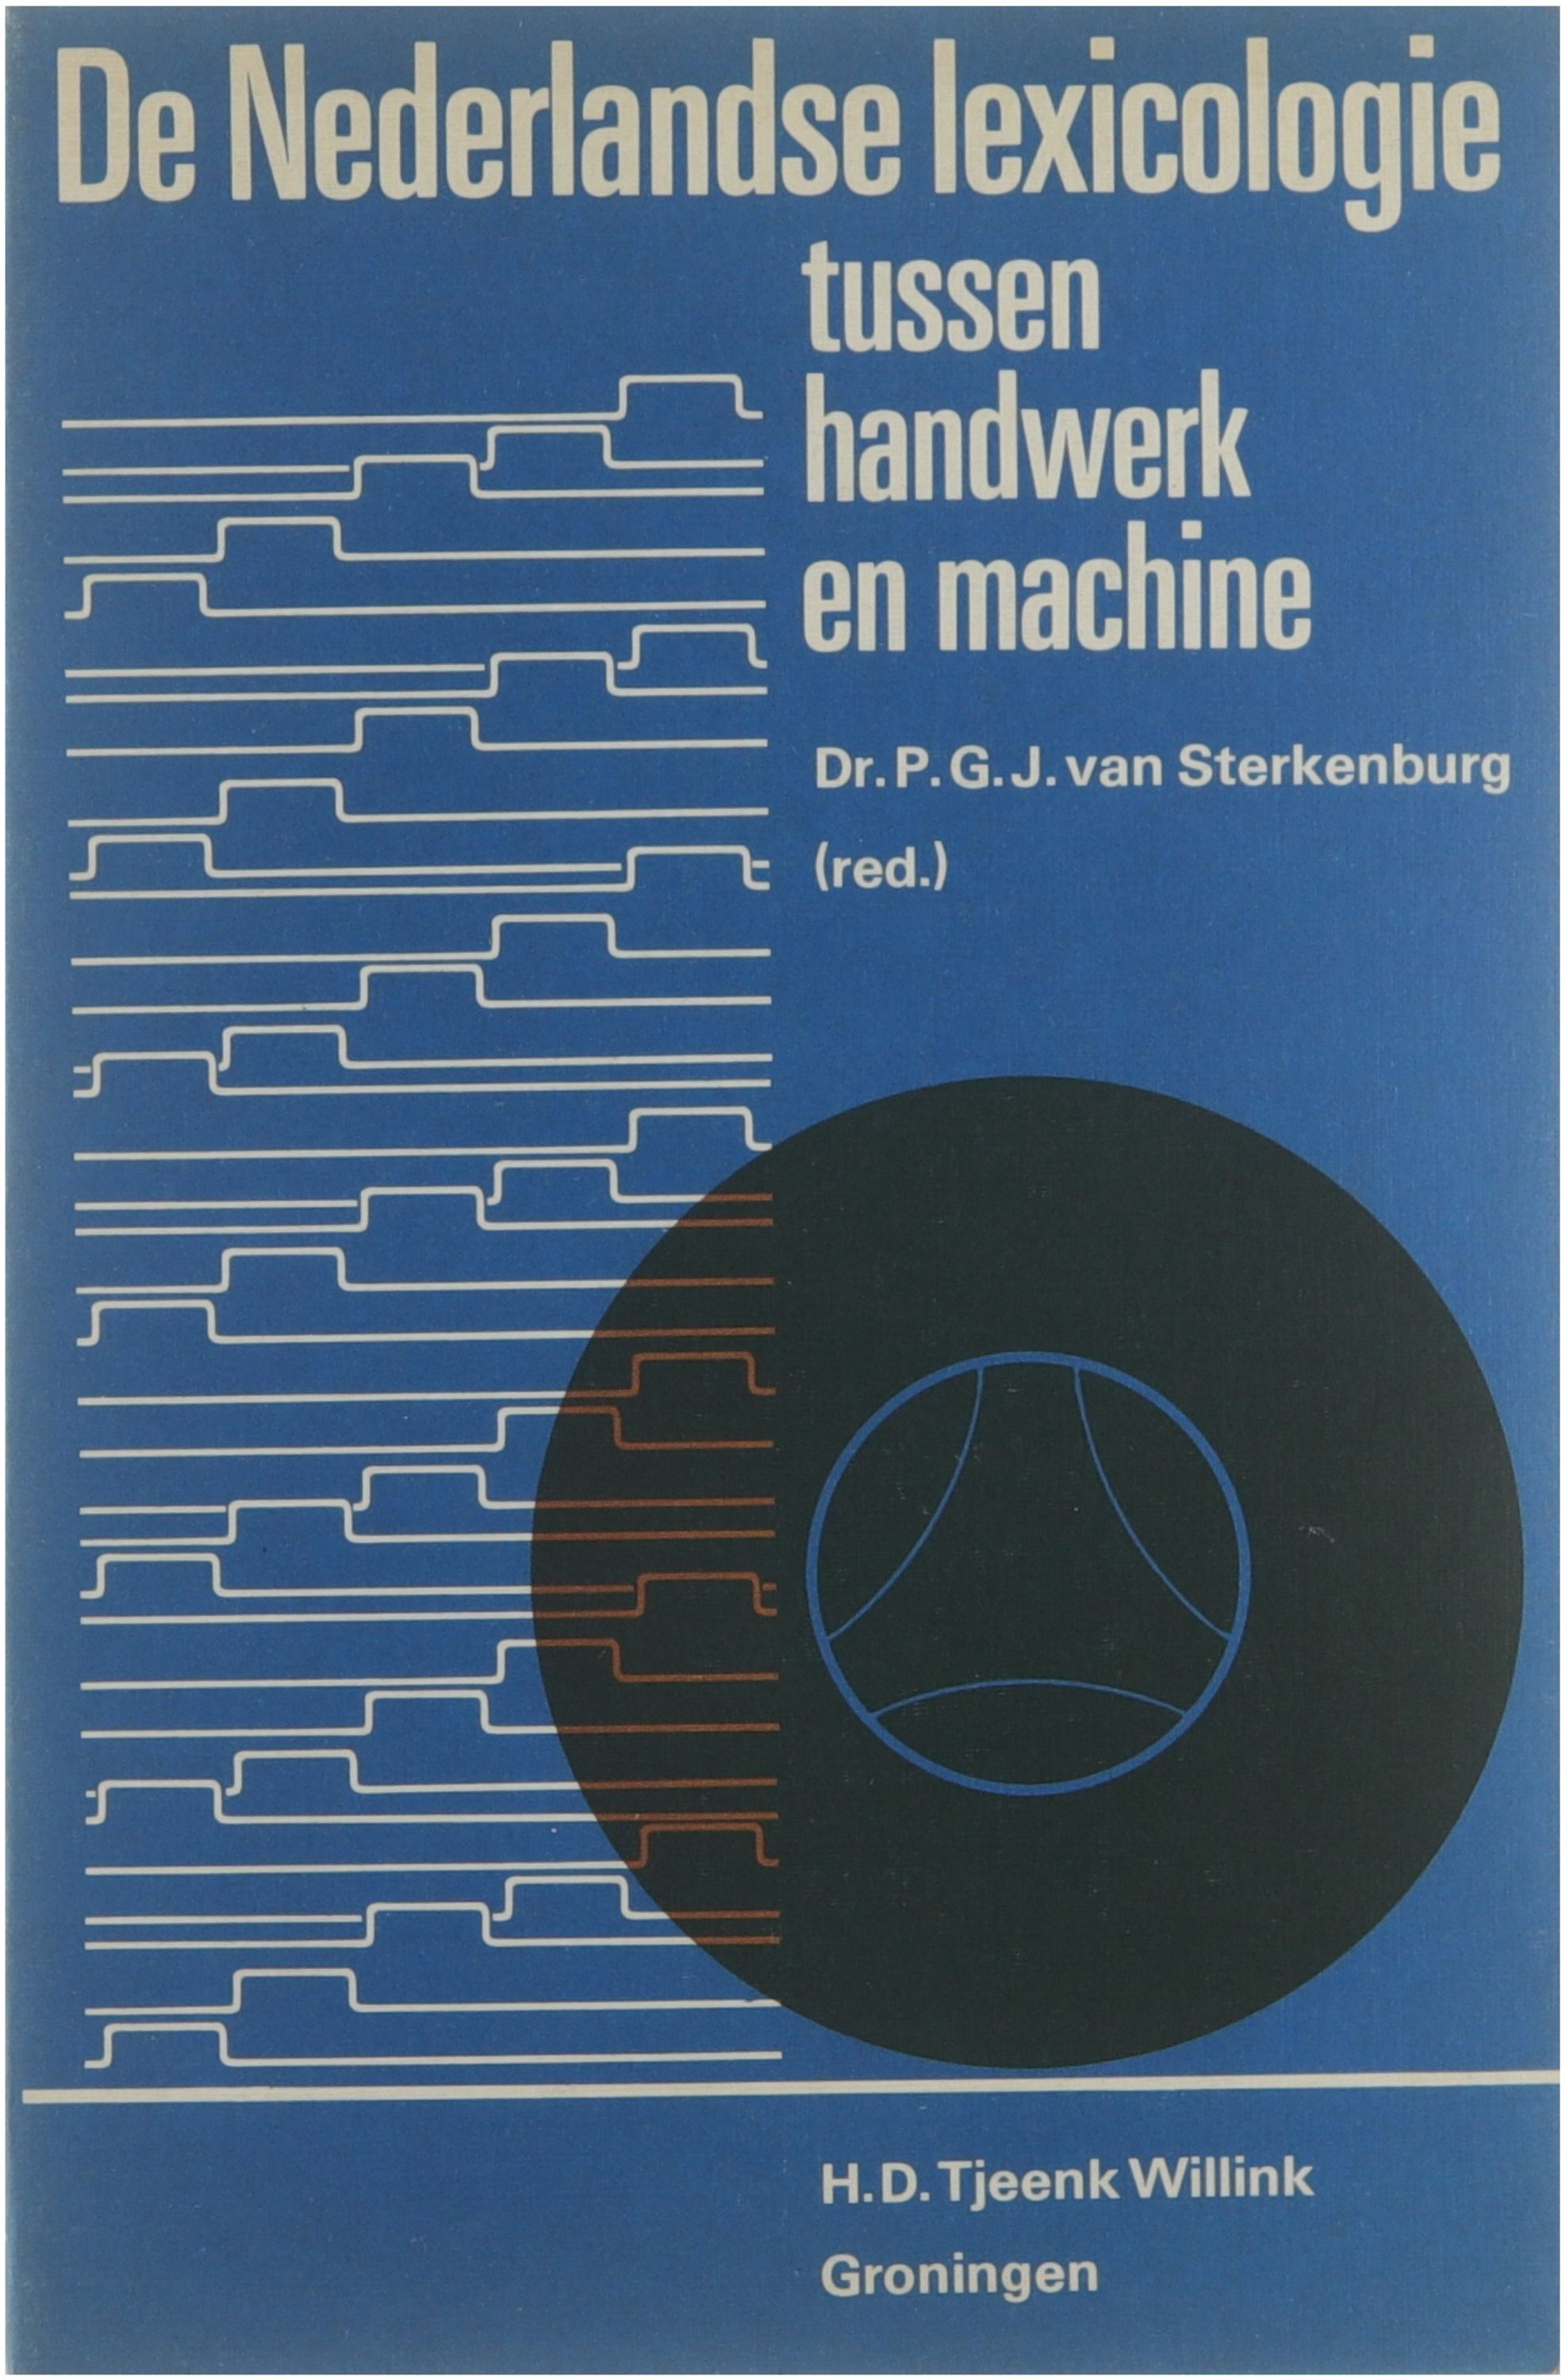 De Nederlandse lexicologie tussen handwerk en machine - P.G.J. van Sterkenburg (red.)